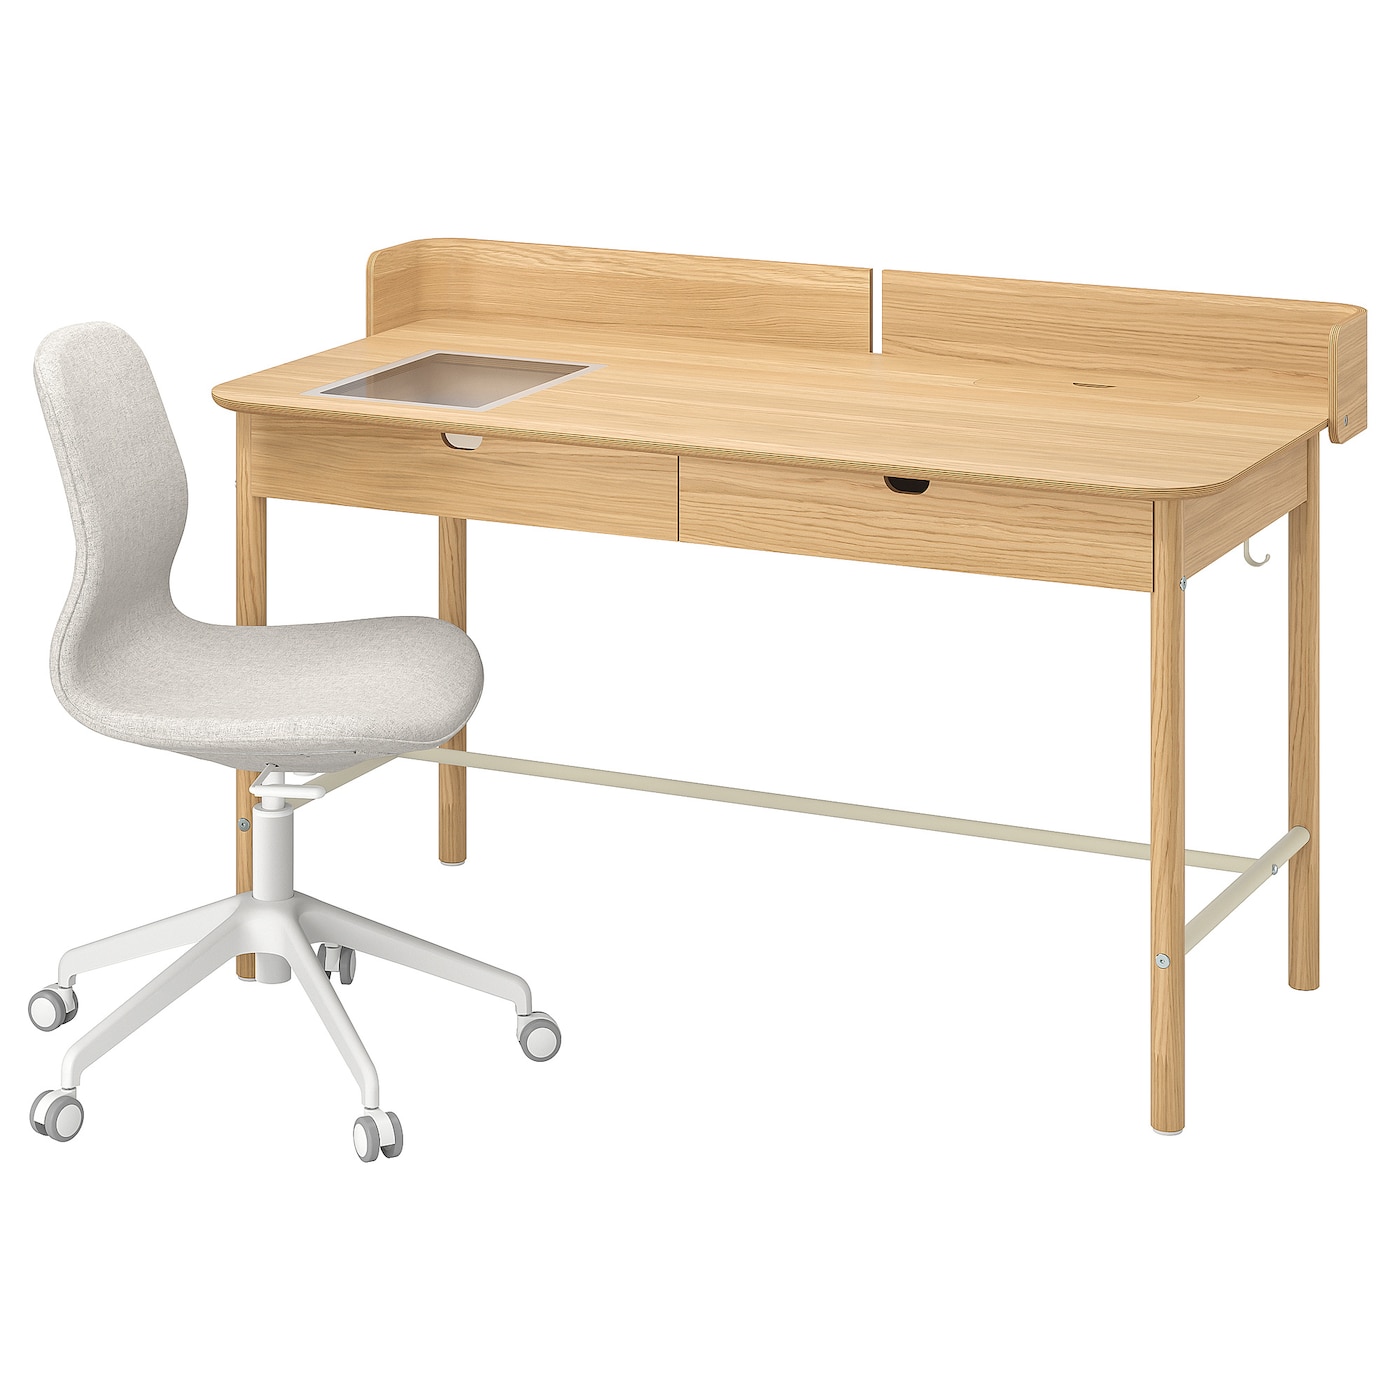 Комбинация: стол и стул - IKEA RIDSPÖ/RIDSPO/LÅNGFJÄLL/LANGFJALL, 140х70 см, дуб, РИДСПО/ЛАНГФЬЕЛЛЬ ИКЕА